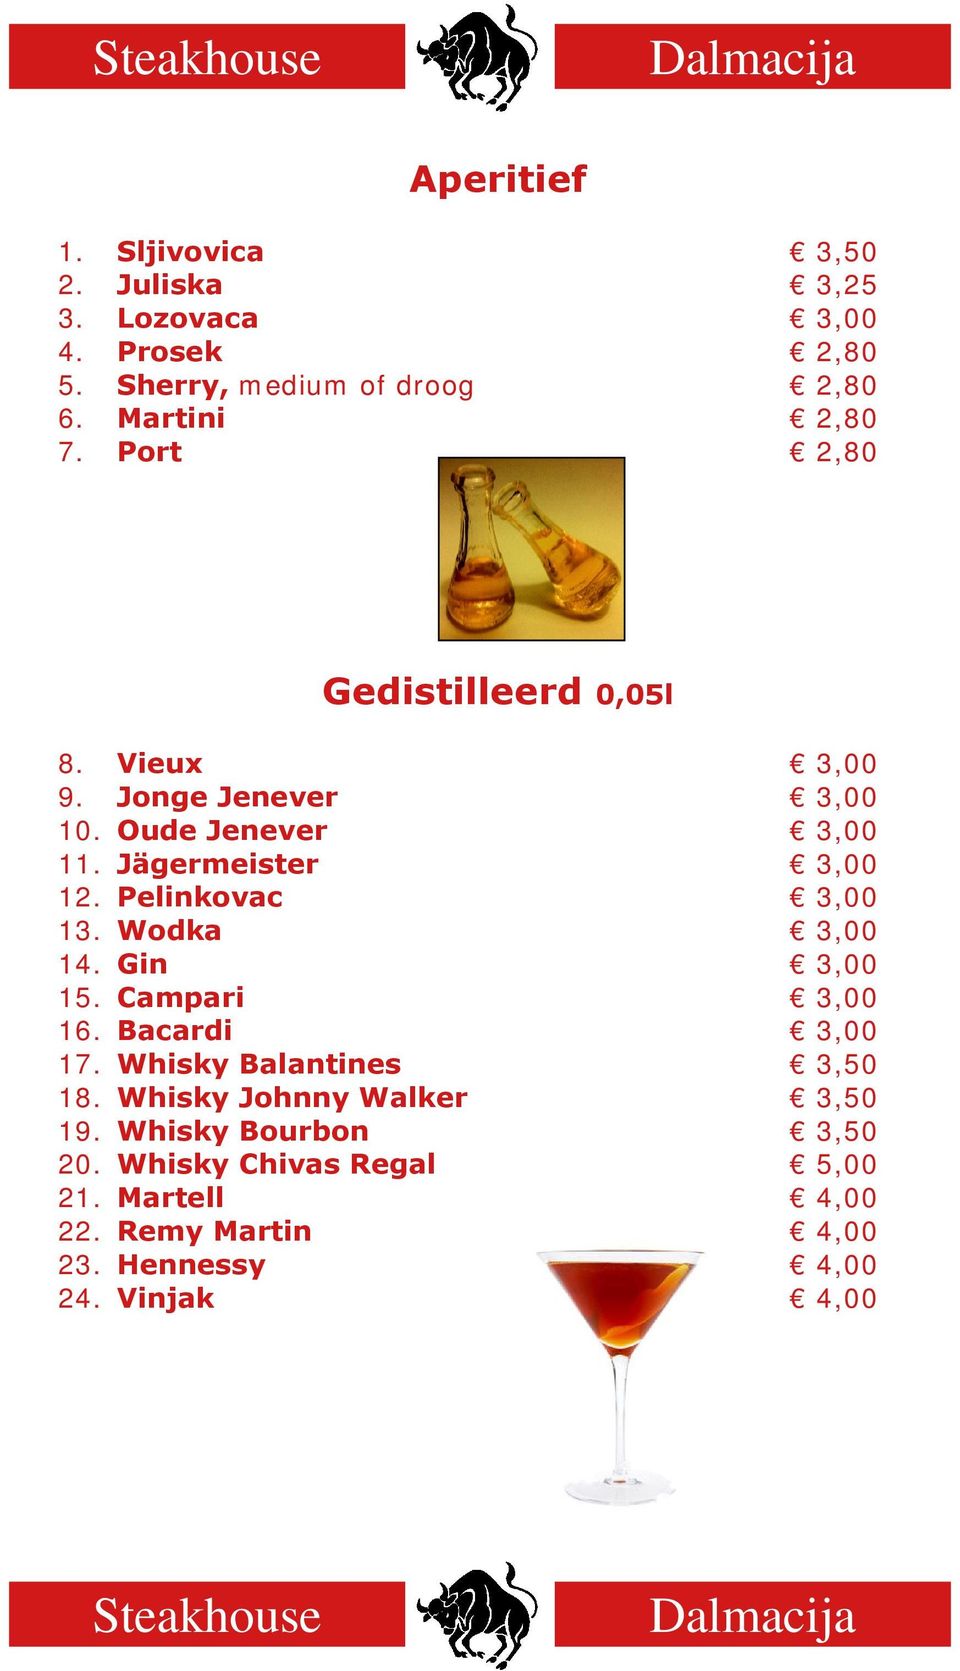 Jägermeister 3,00 12. Pelinkovac 3,00 13. Wodka 3,00 14. Gin 3,00 15. Campari 3,00 16. Bacardi 3,00 17.